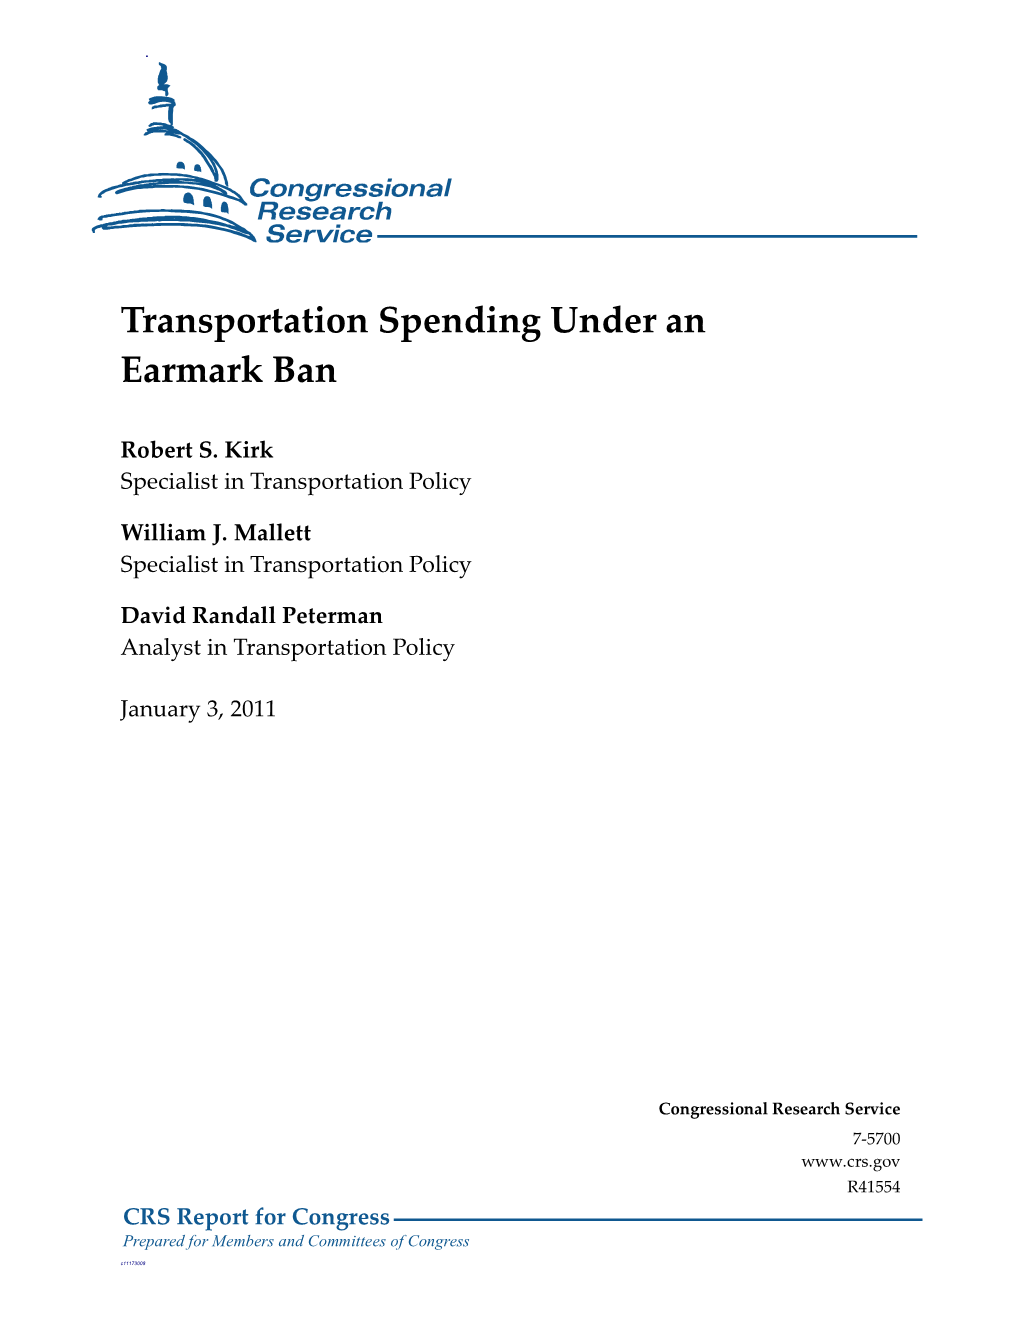 Transportation Spending Under an Earmark Ban